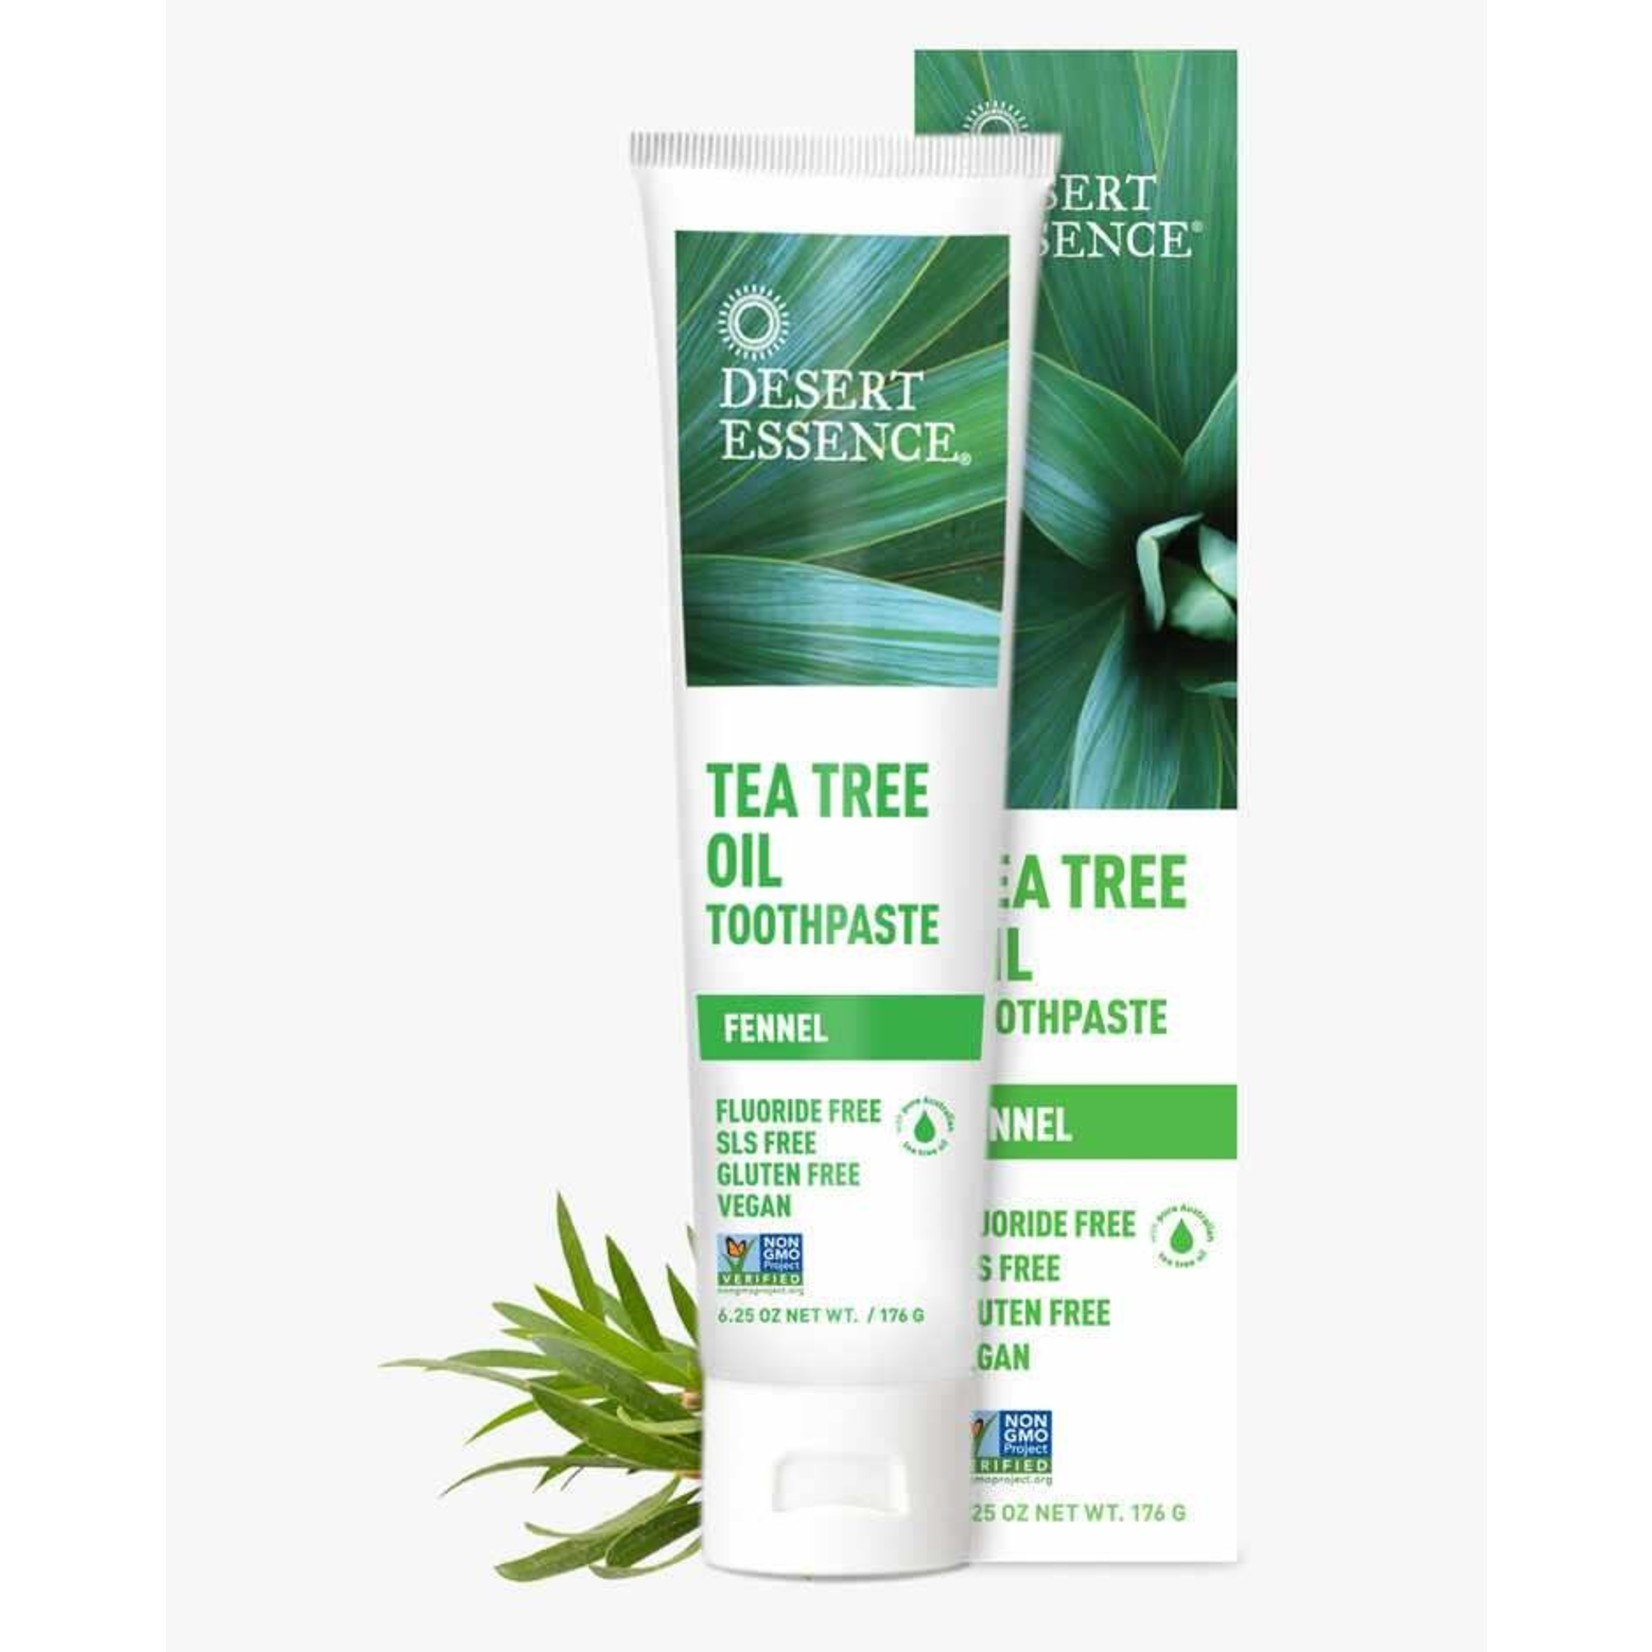 Desert Essence Desert Essence - Toothpaste Tea Tree Fennel - 6.25 oz